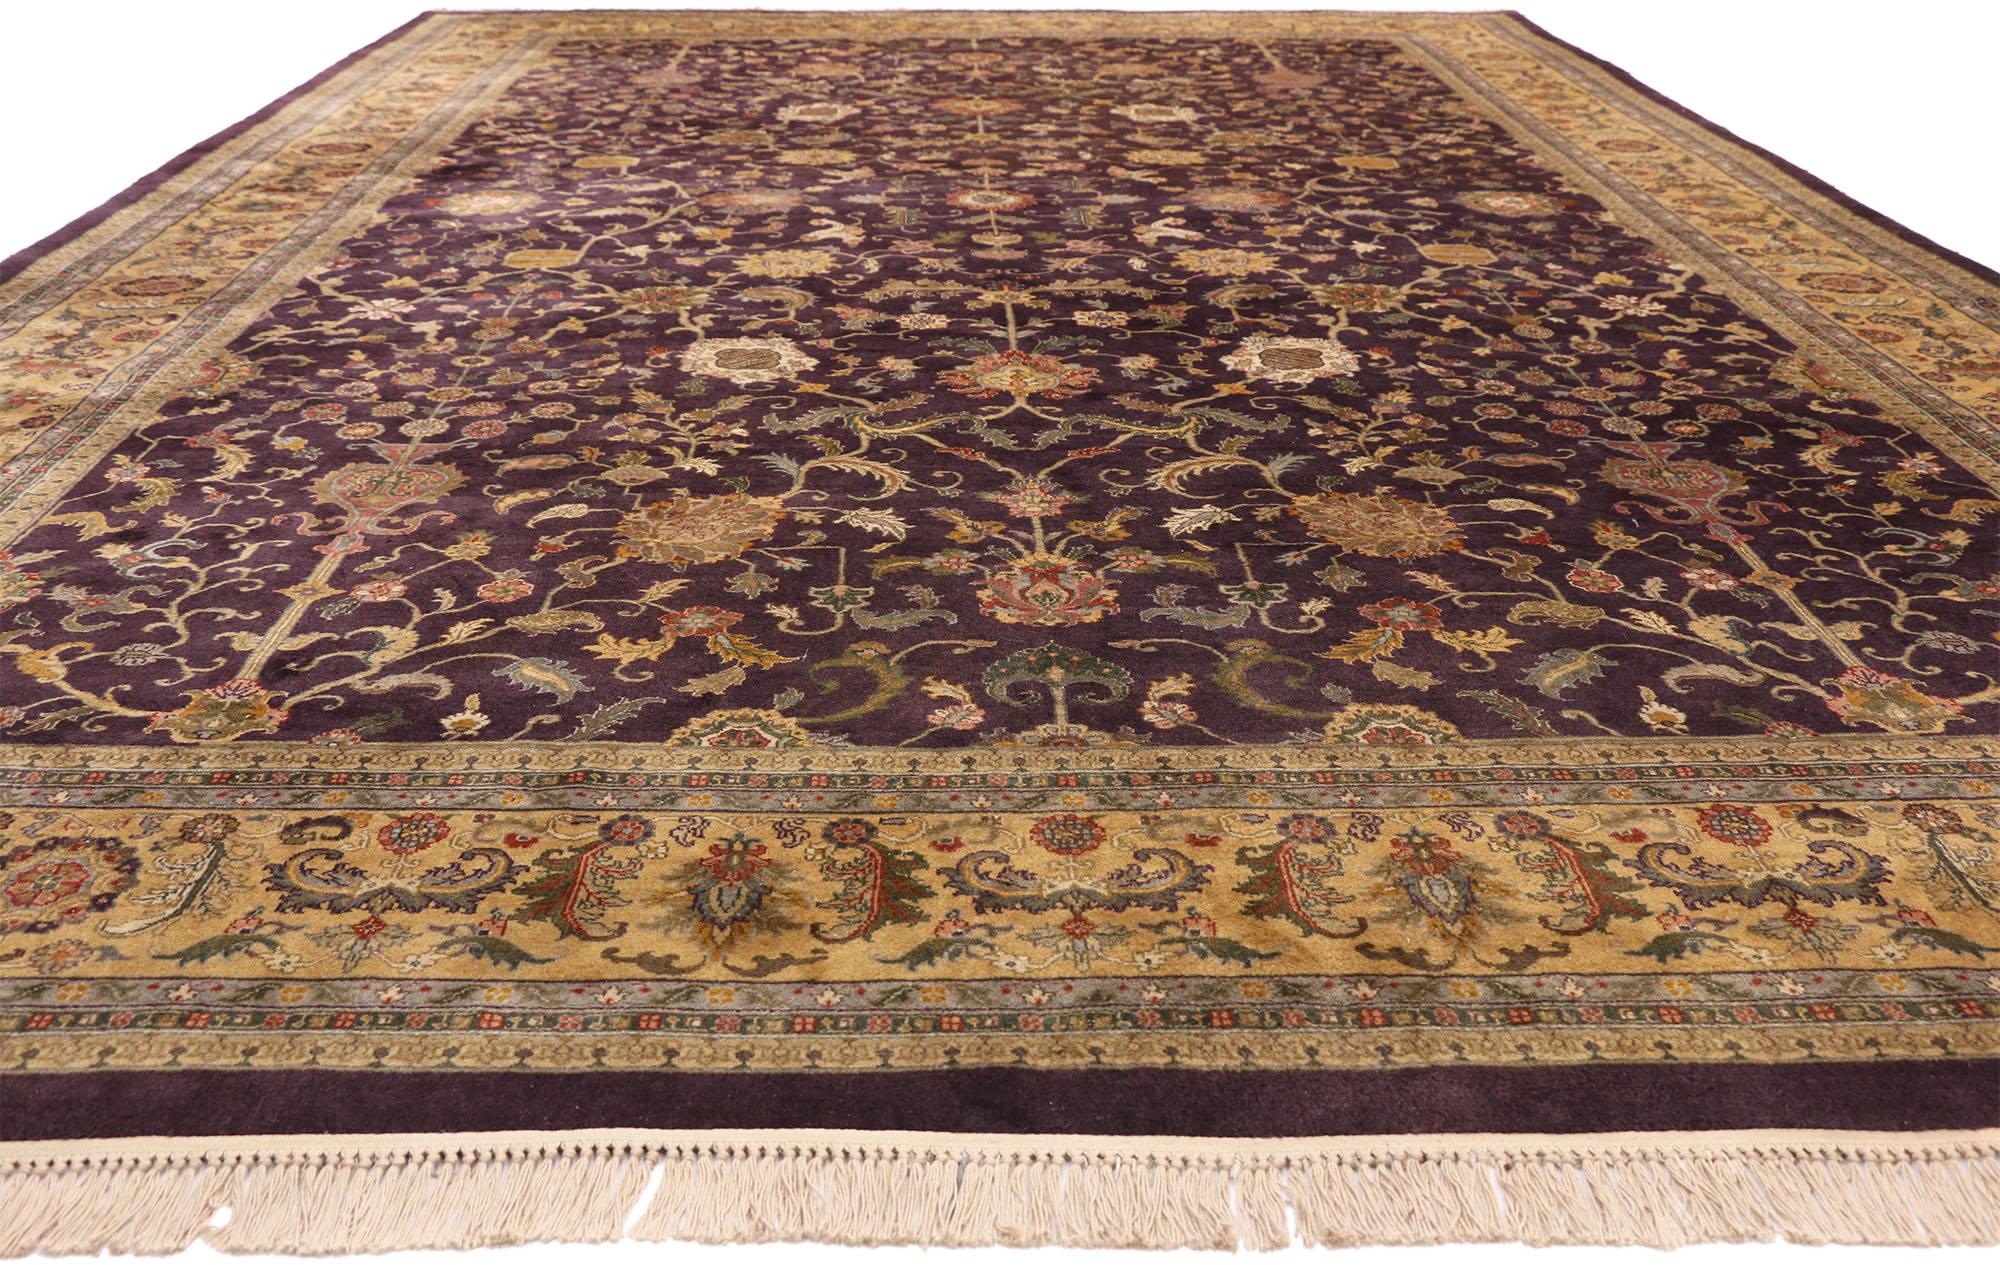 Agra Vintage Aubergine Indian Palatial Carpet, 11'03 x 17'08 For Sale